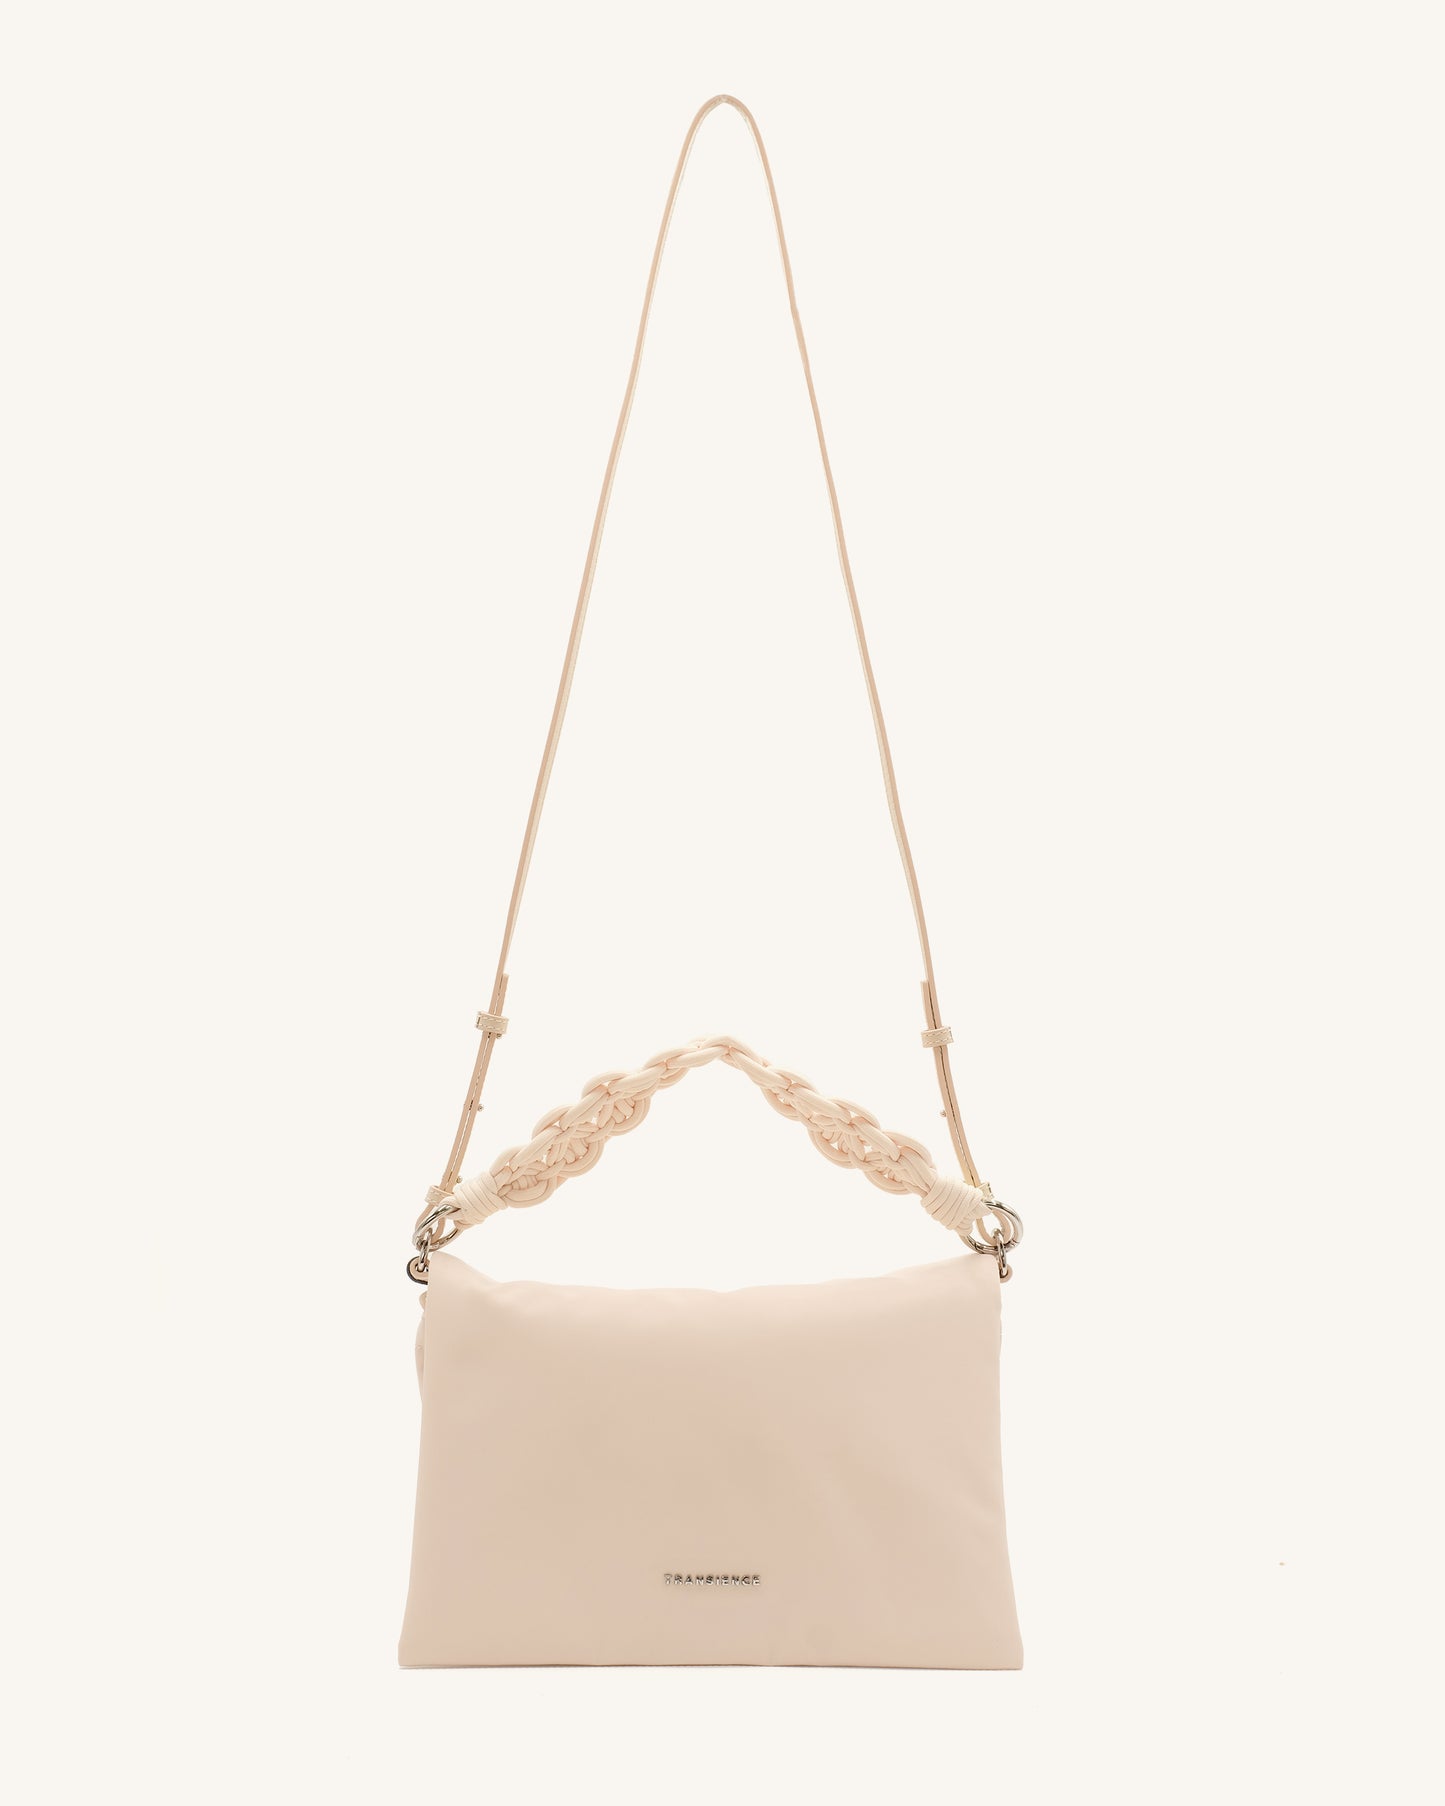 Pillow Bag - Coconut